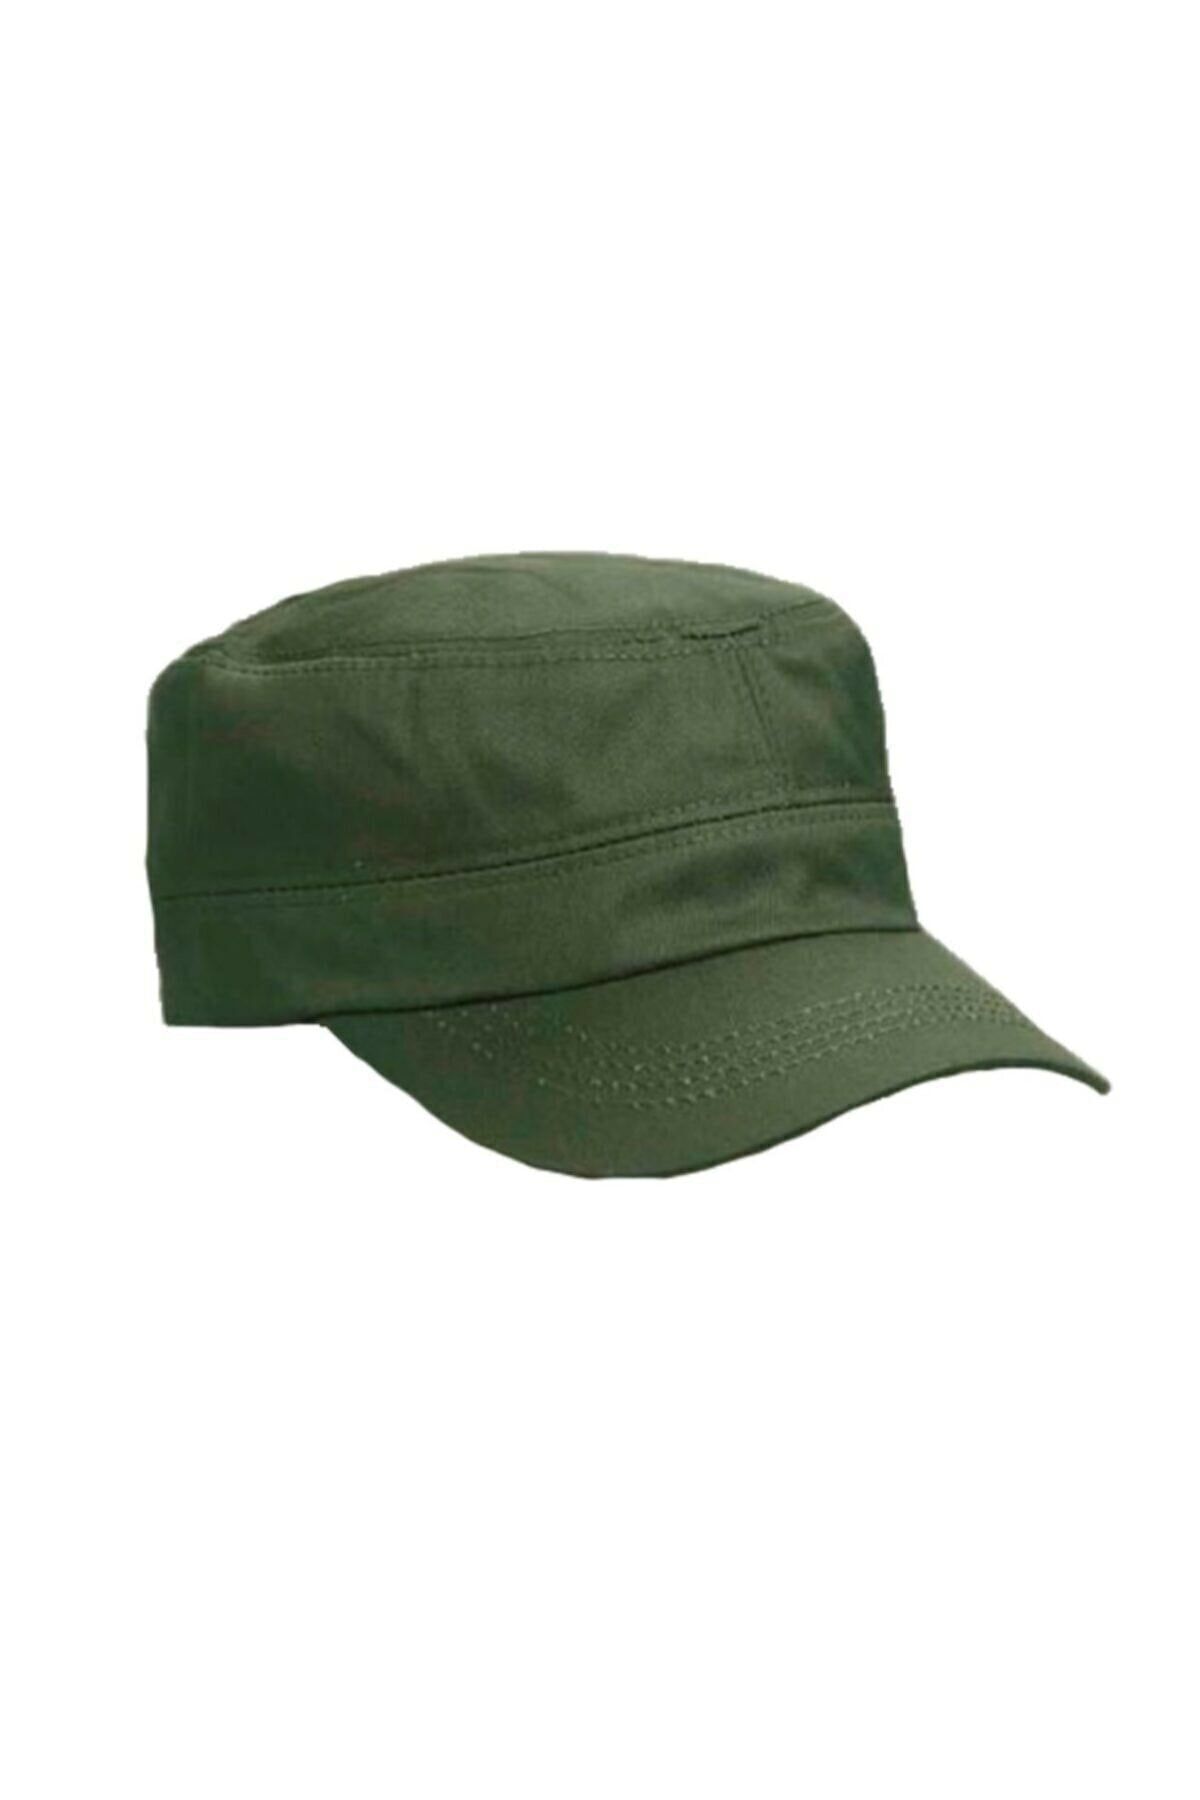 SYT Haki Yeşil Castro Şapka Kep Avcı Model